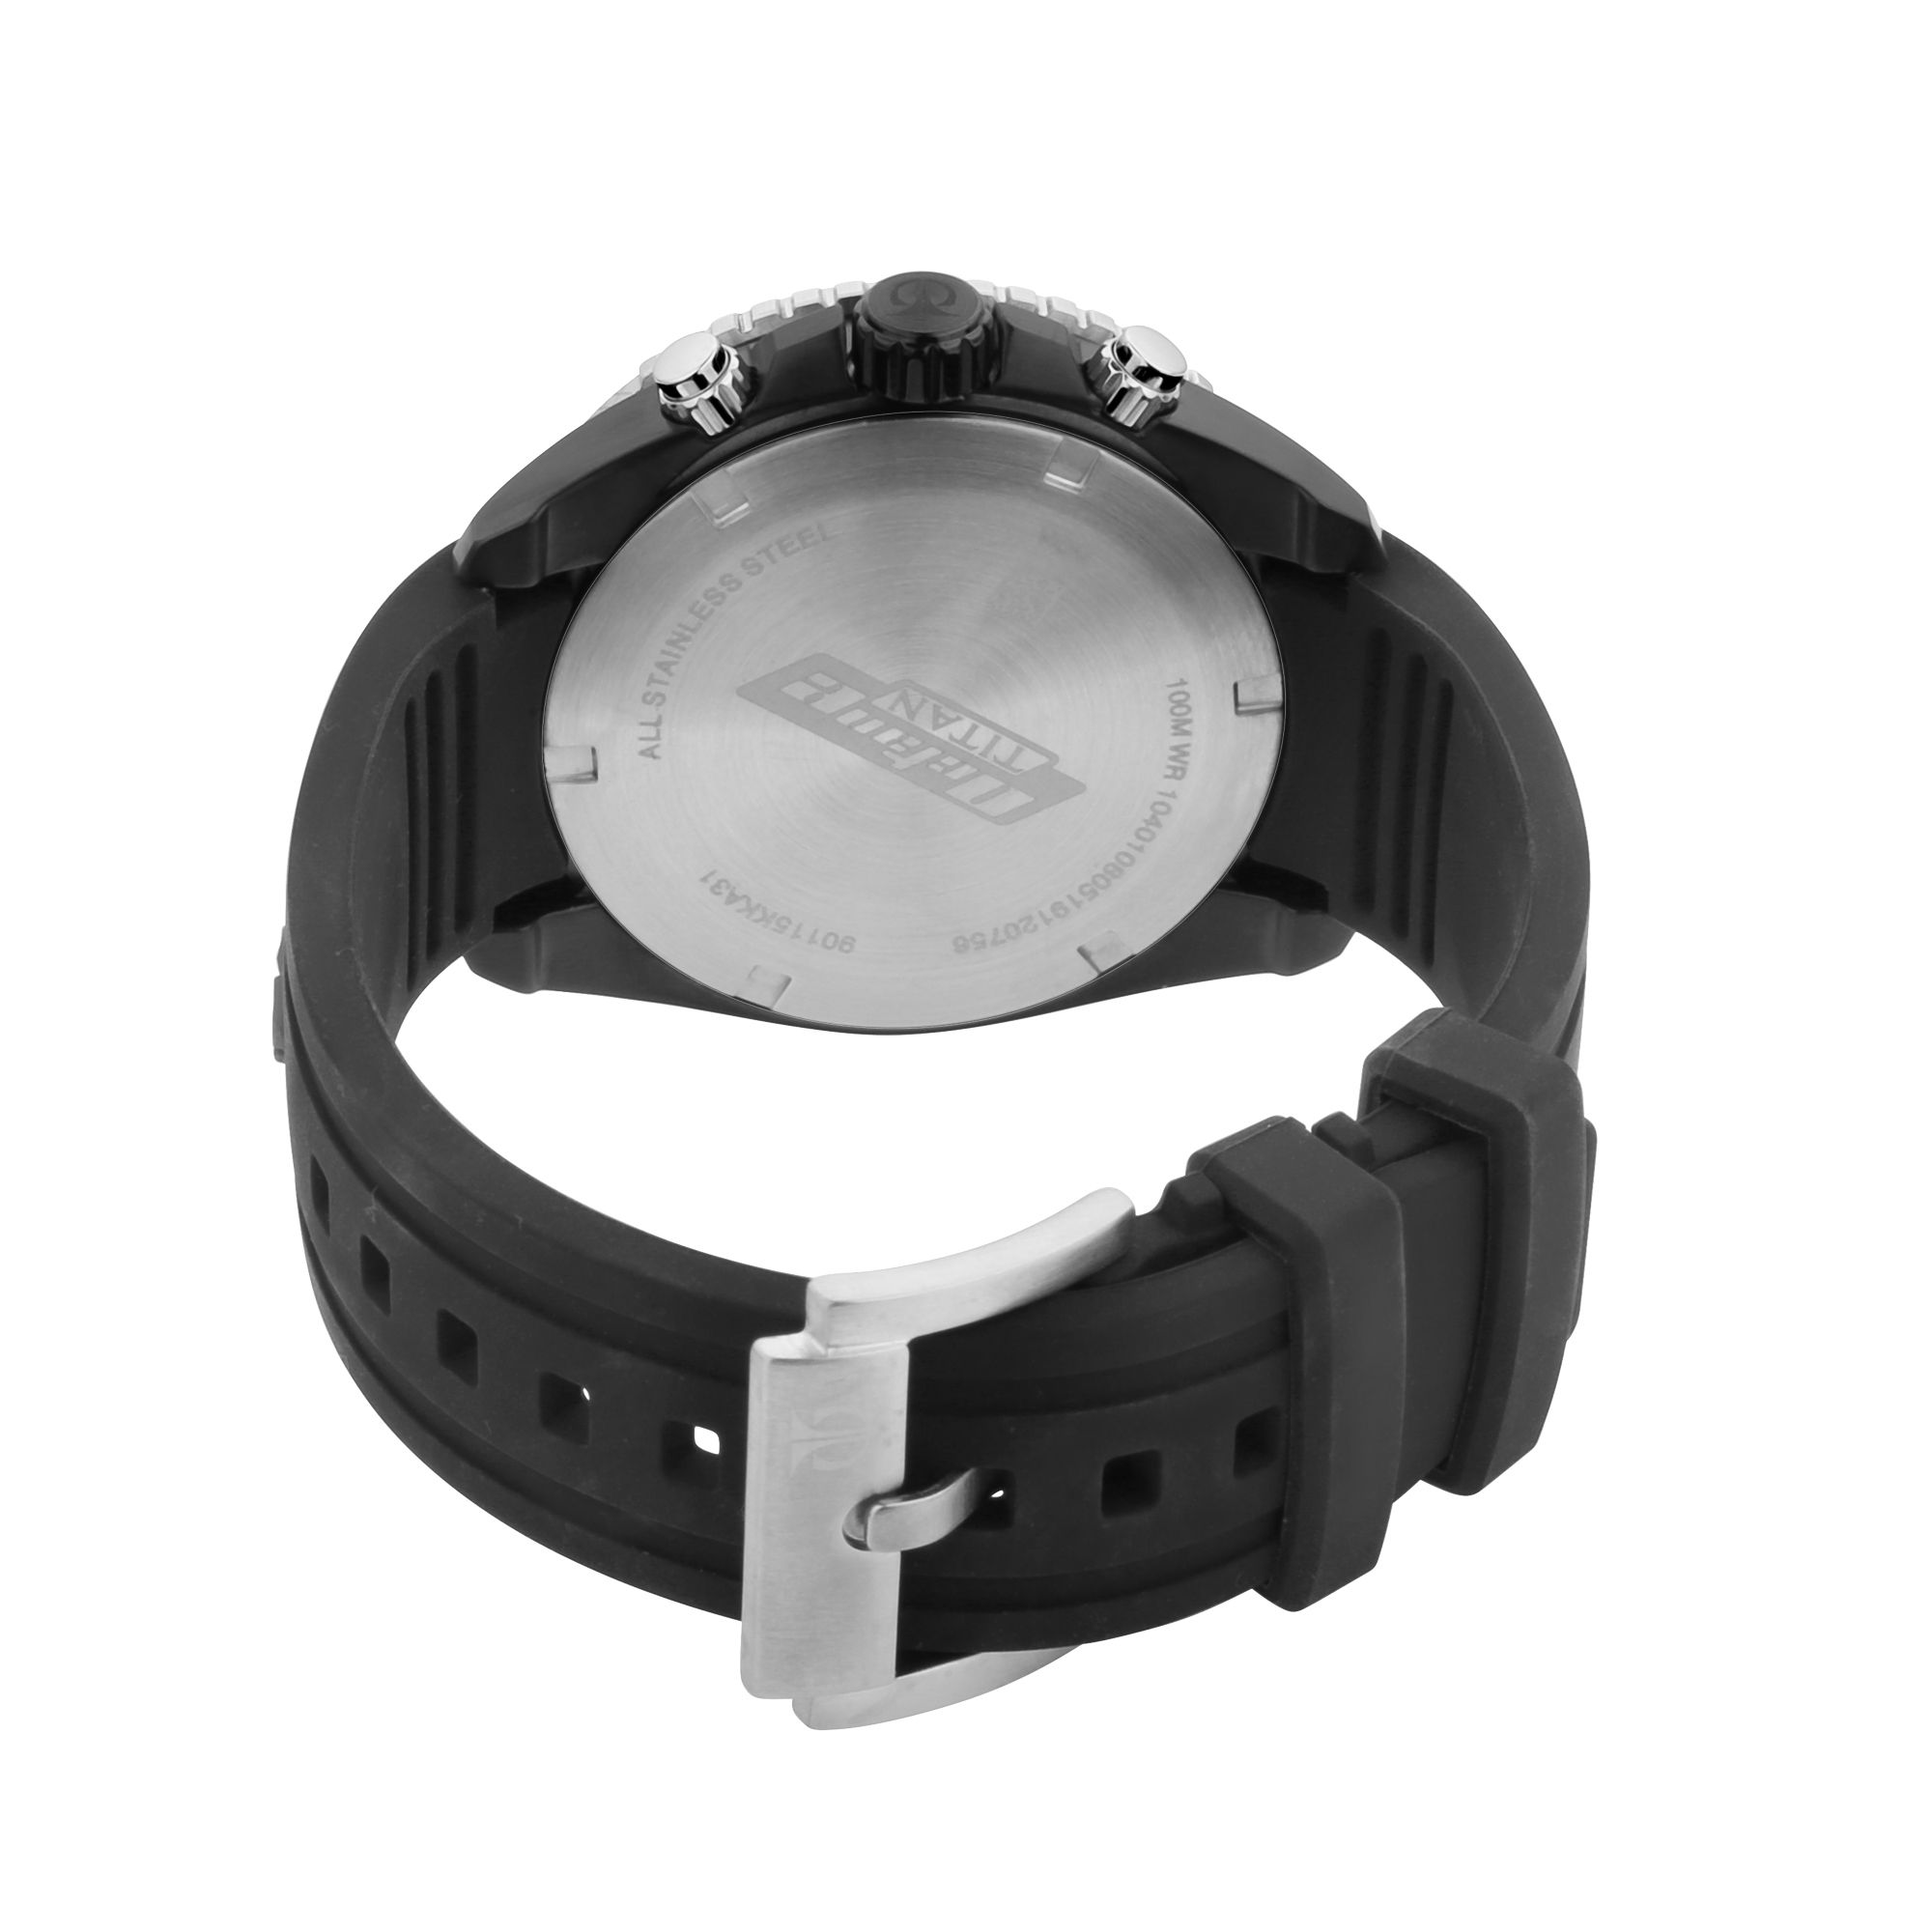 Titan Octane Hyper Lume Watch With Silicone Strap: Buy Titan Octane ...